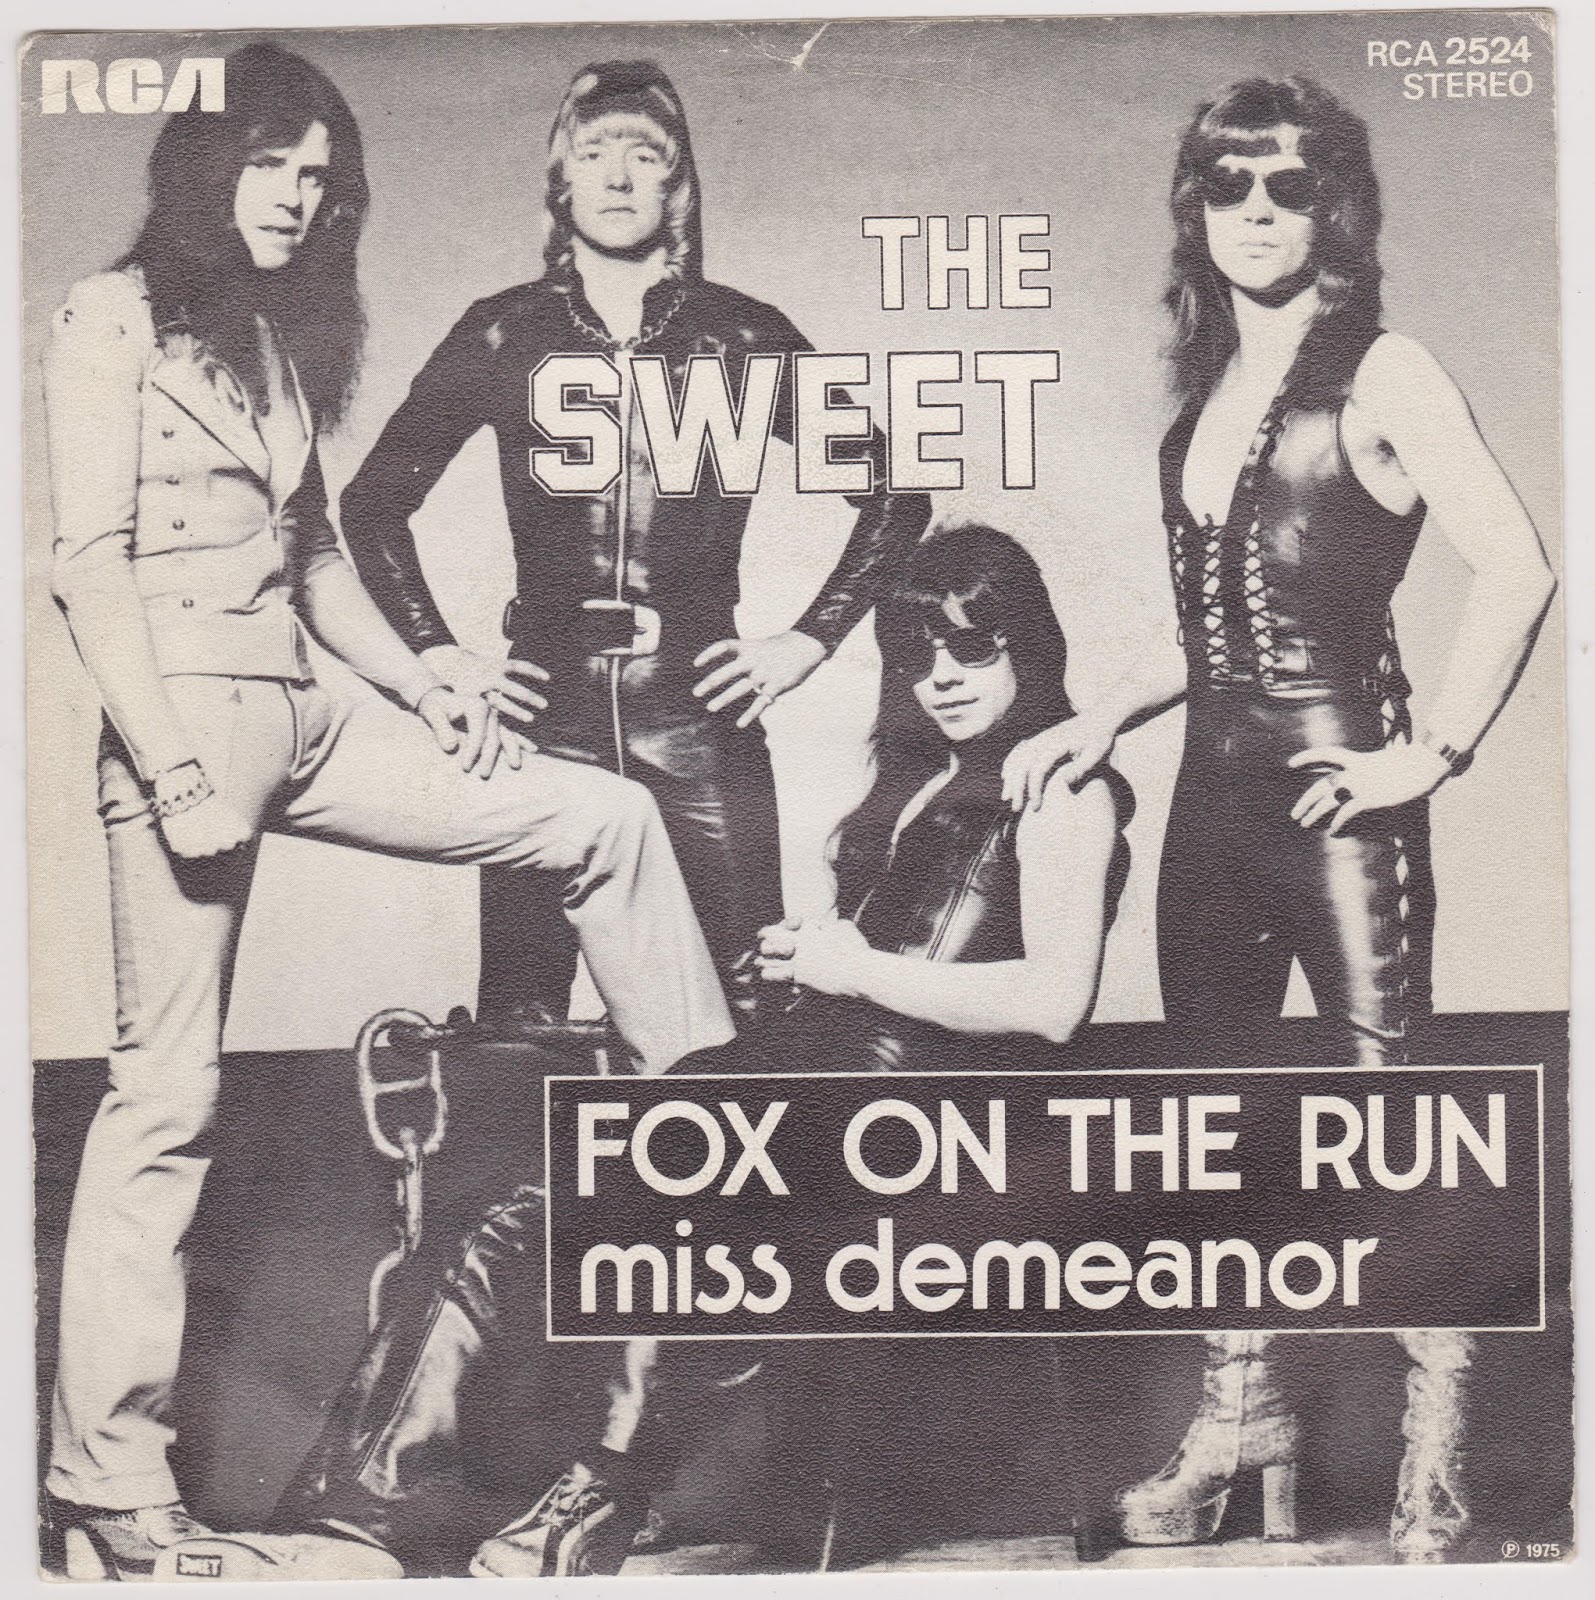 Fox on the run. Fox on the Run-1975 Sweet. Fox on the Run группы the Sweet.. Fox on the Run Sweet обложка альбома. Sweet.